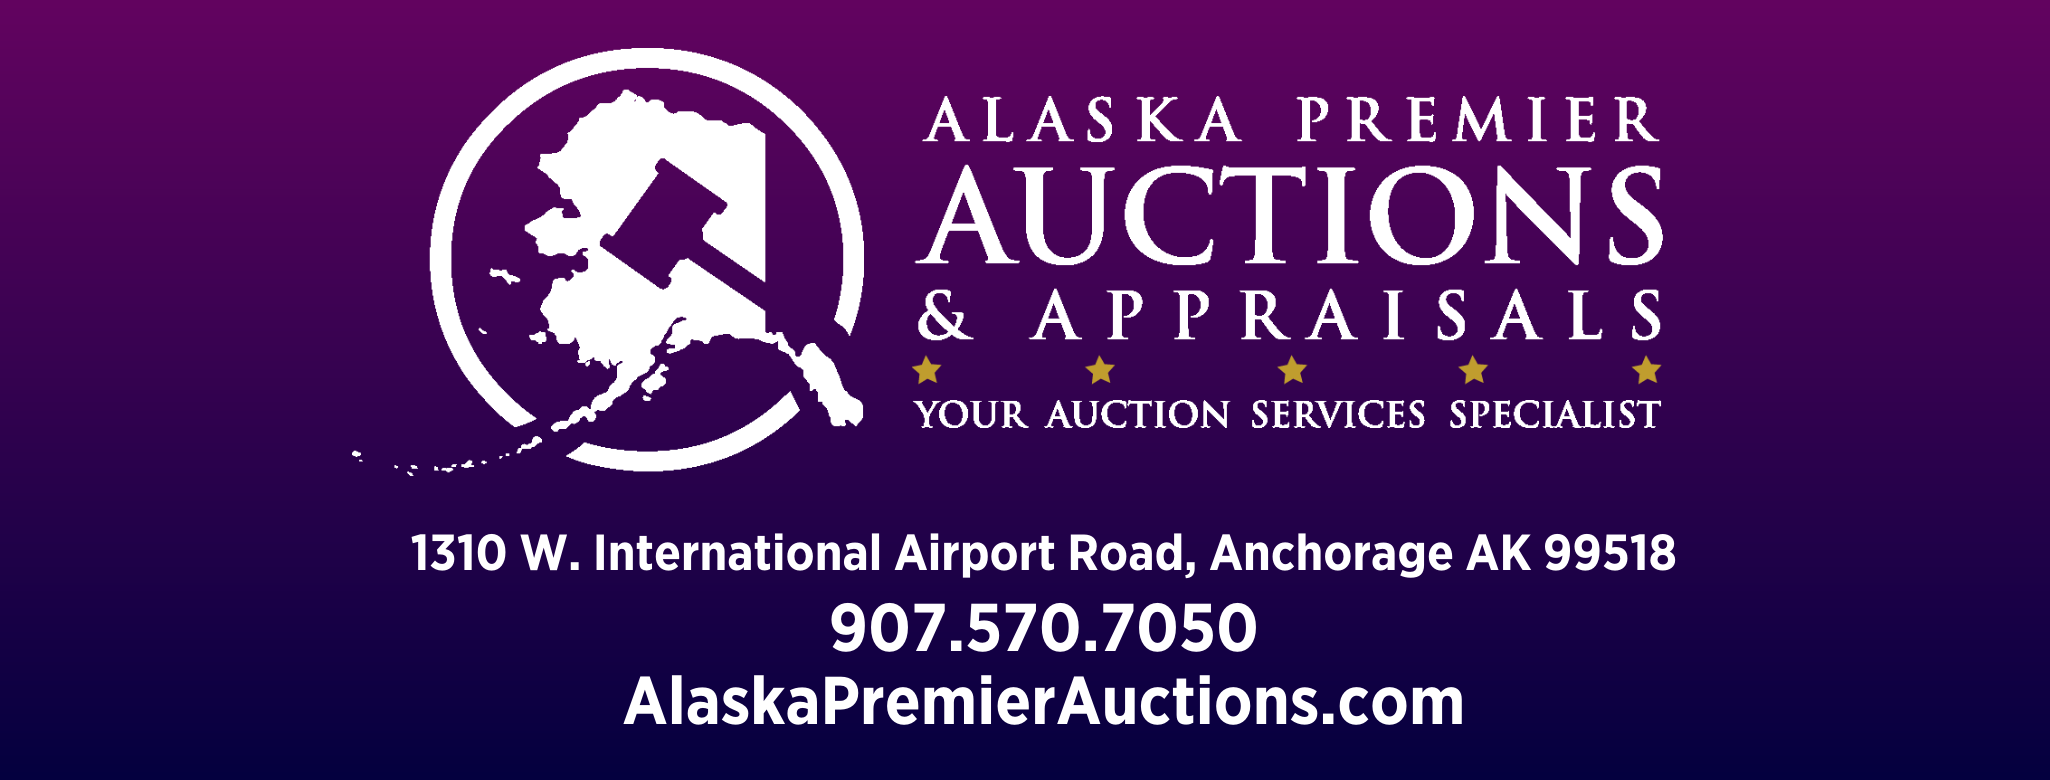 Alaska Premier Auctions & Appraisals Header